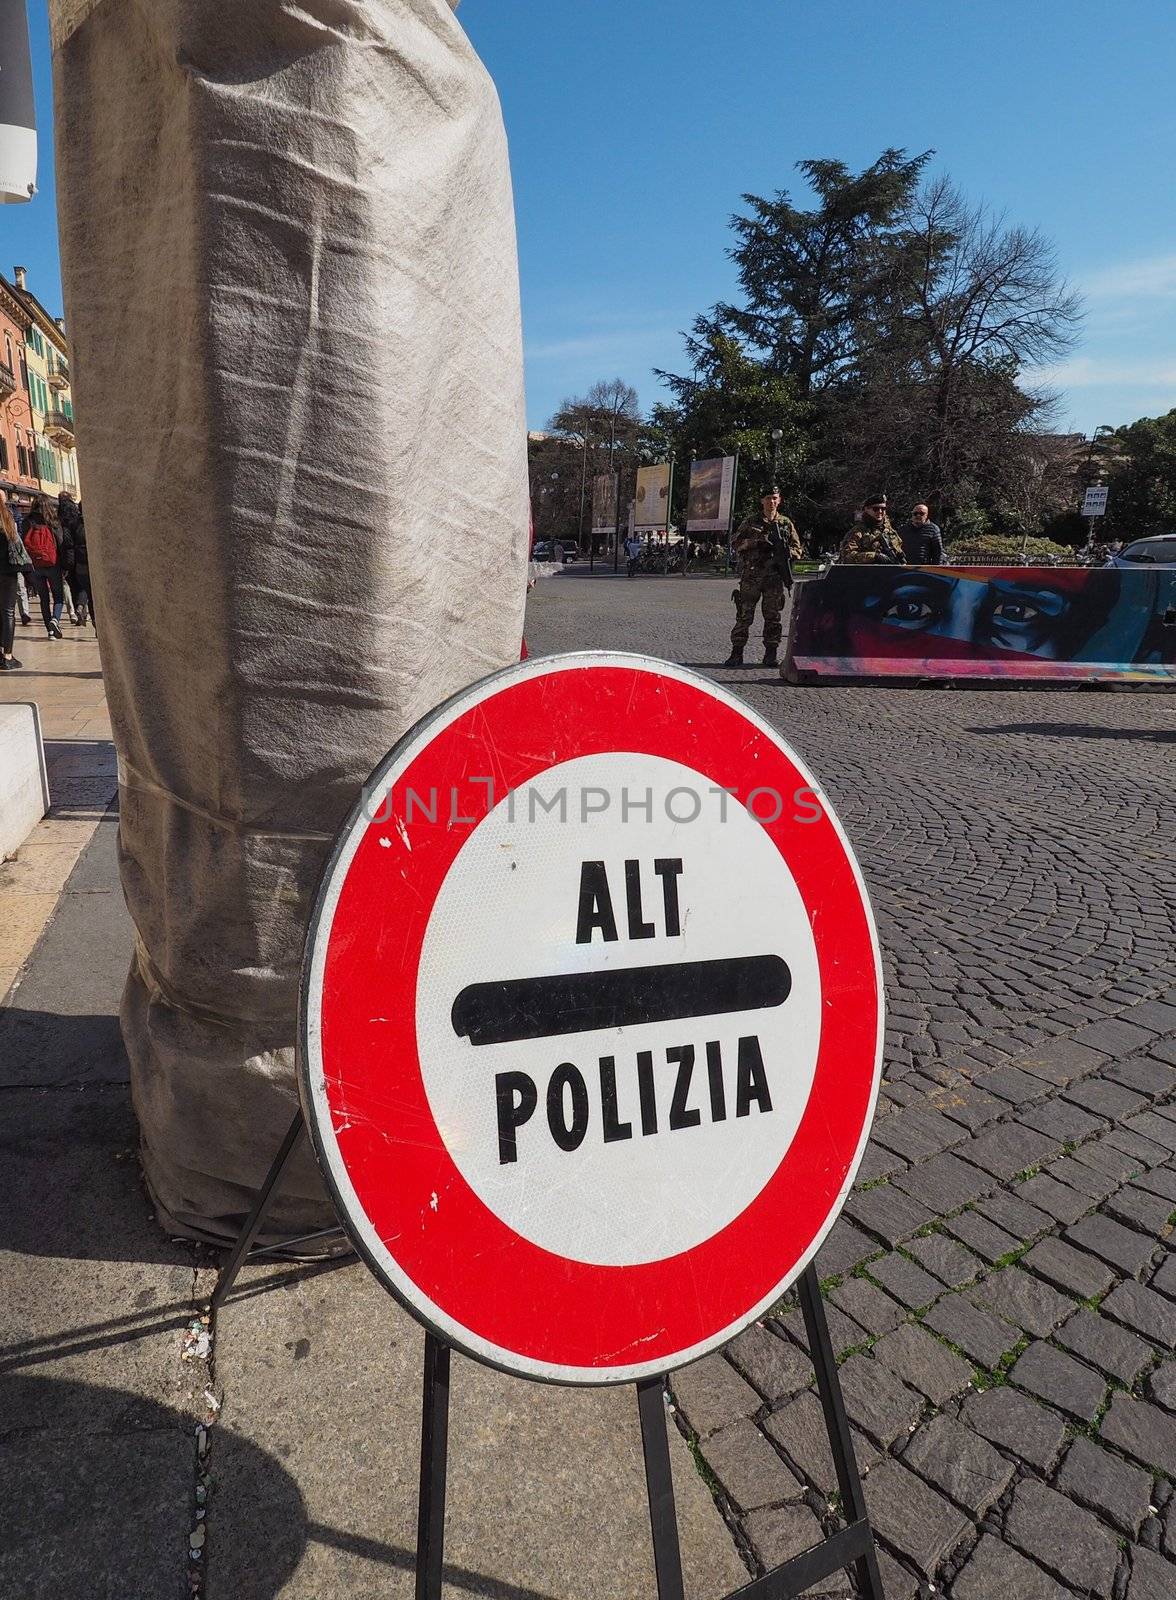 Alt Polizia (Stop Police) sign in Verona by claudiodivizia